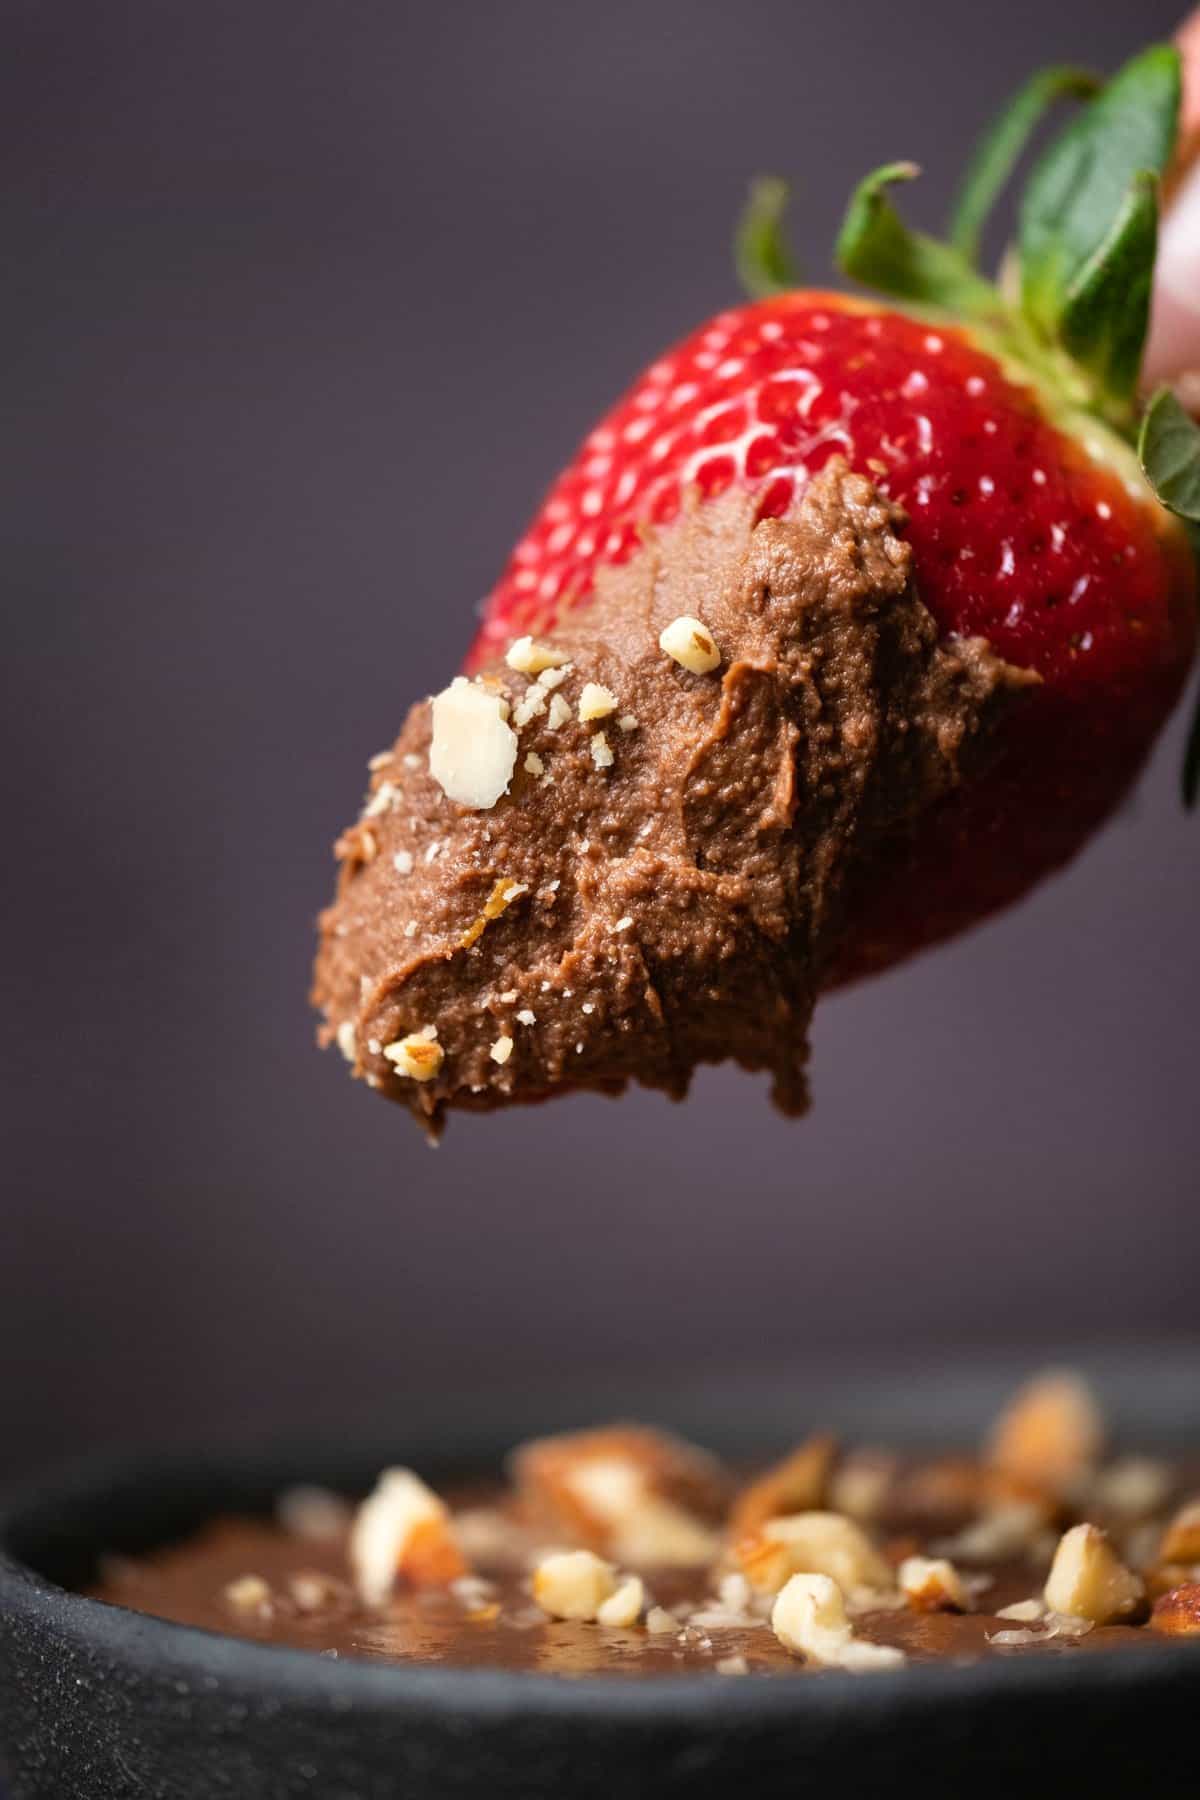 Strawberry dipped into chocolate hummus. 